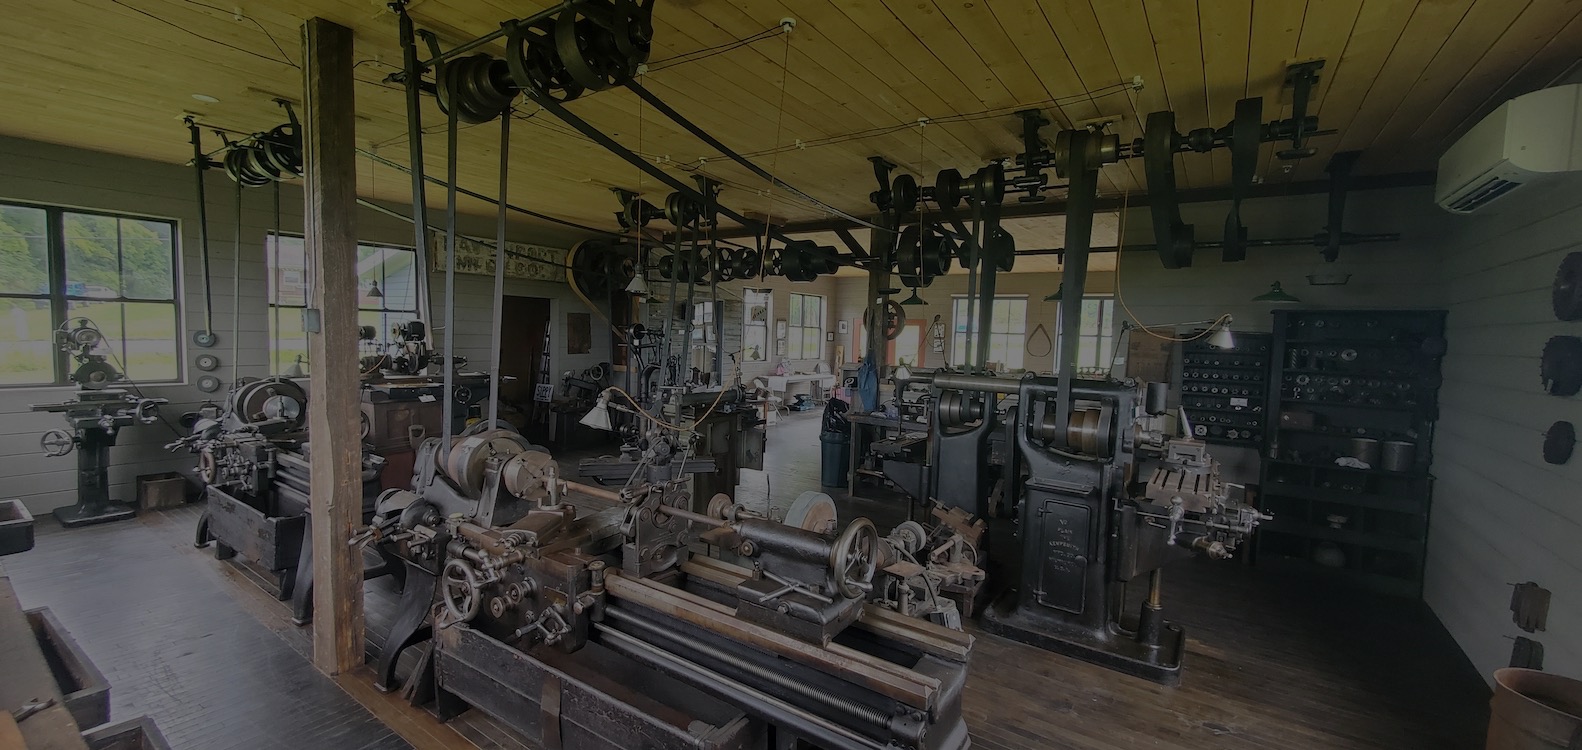 Sippy Historic Machine Shop